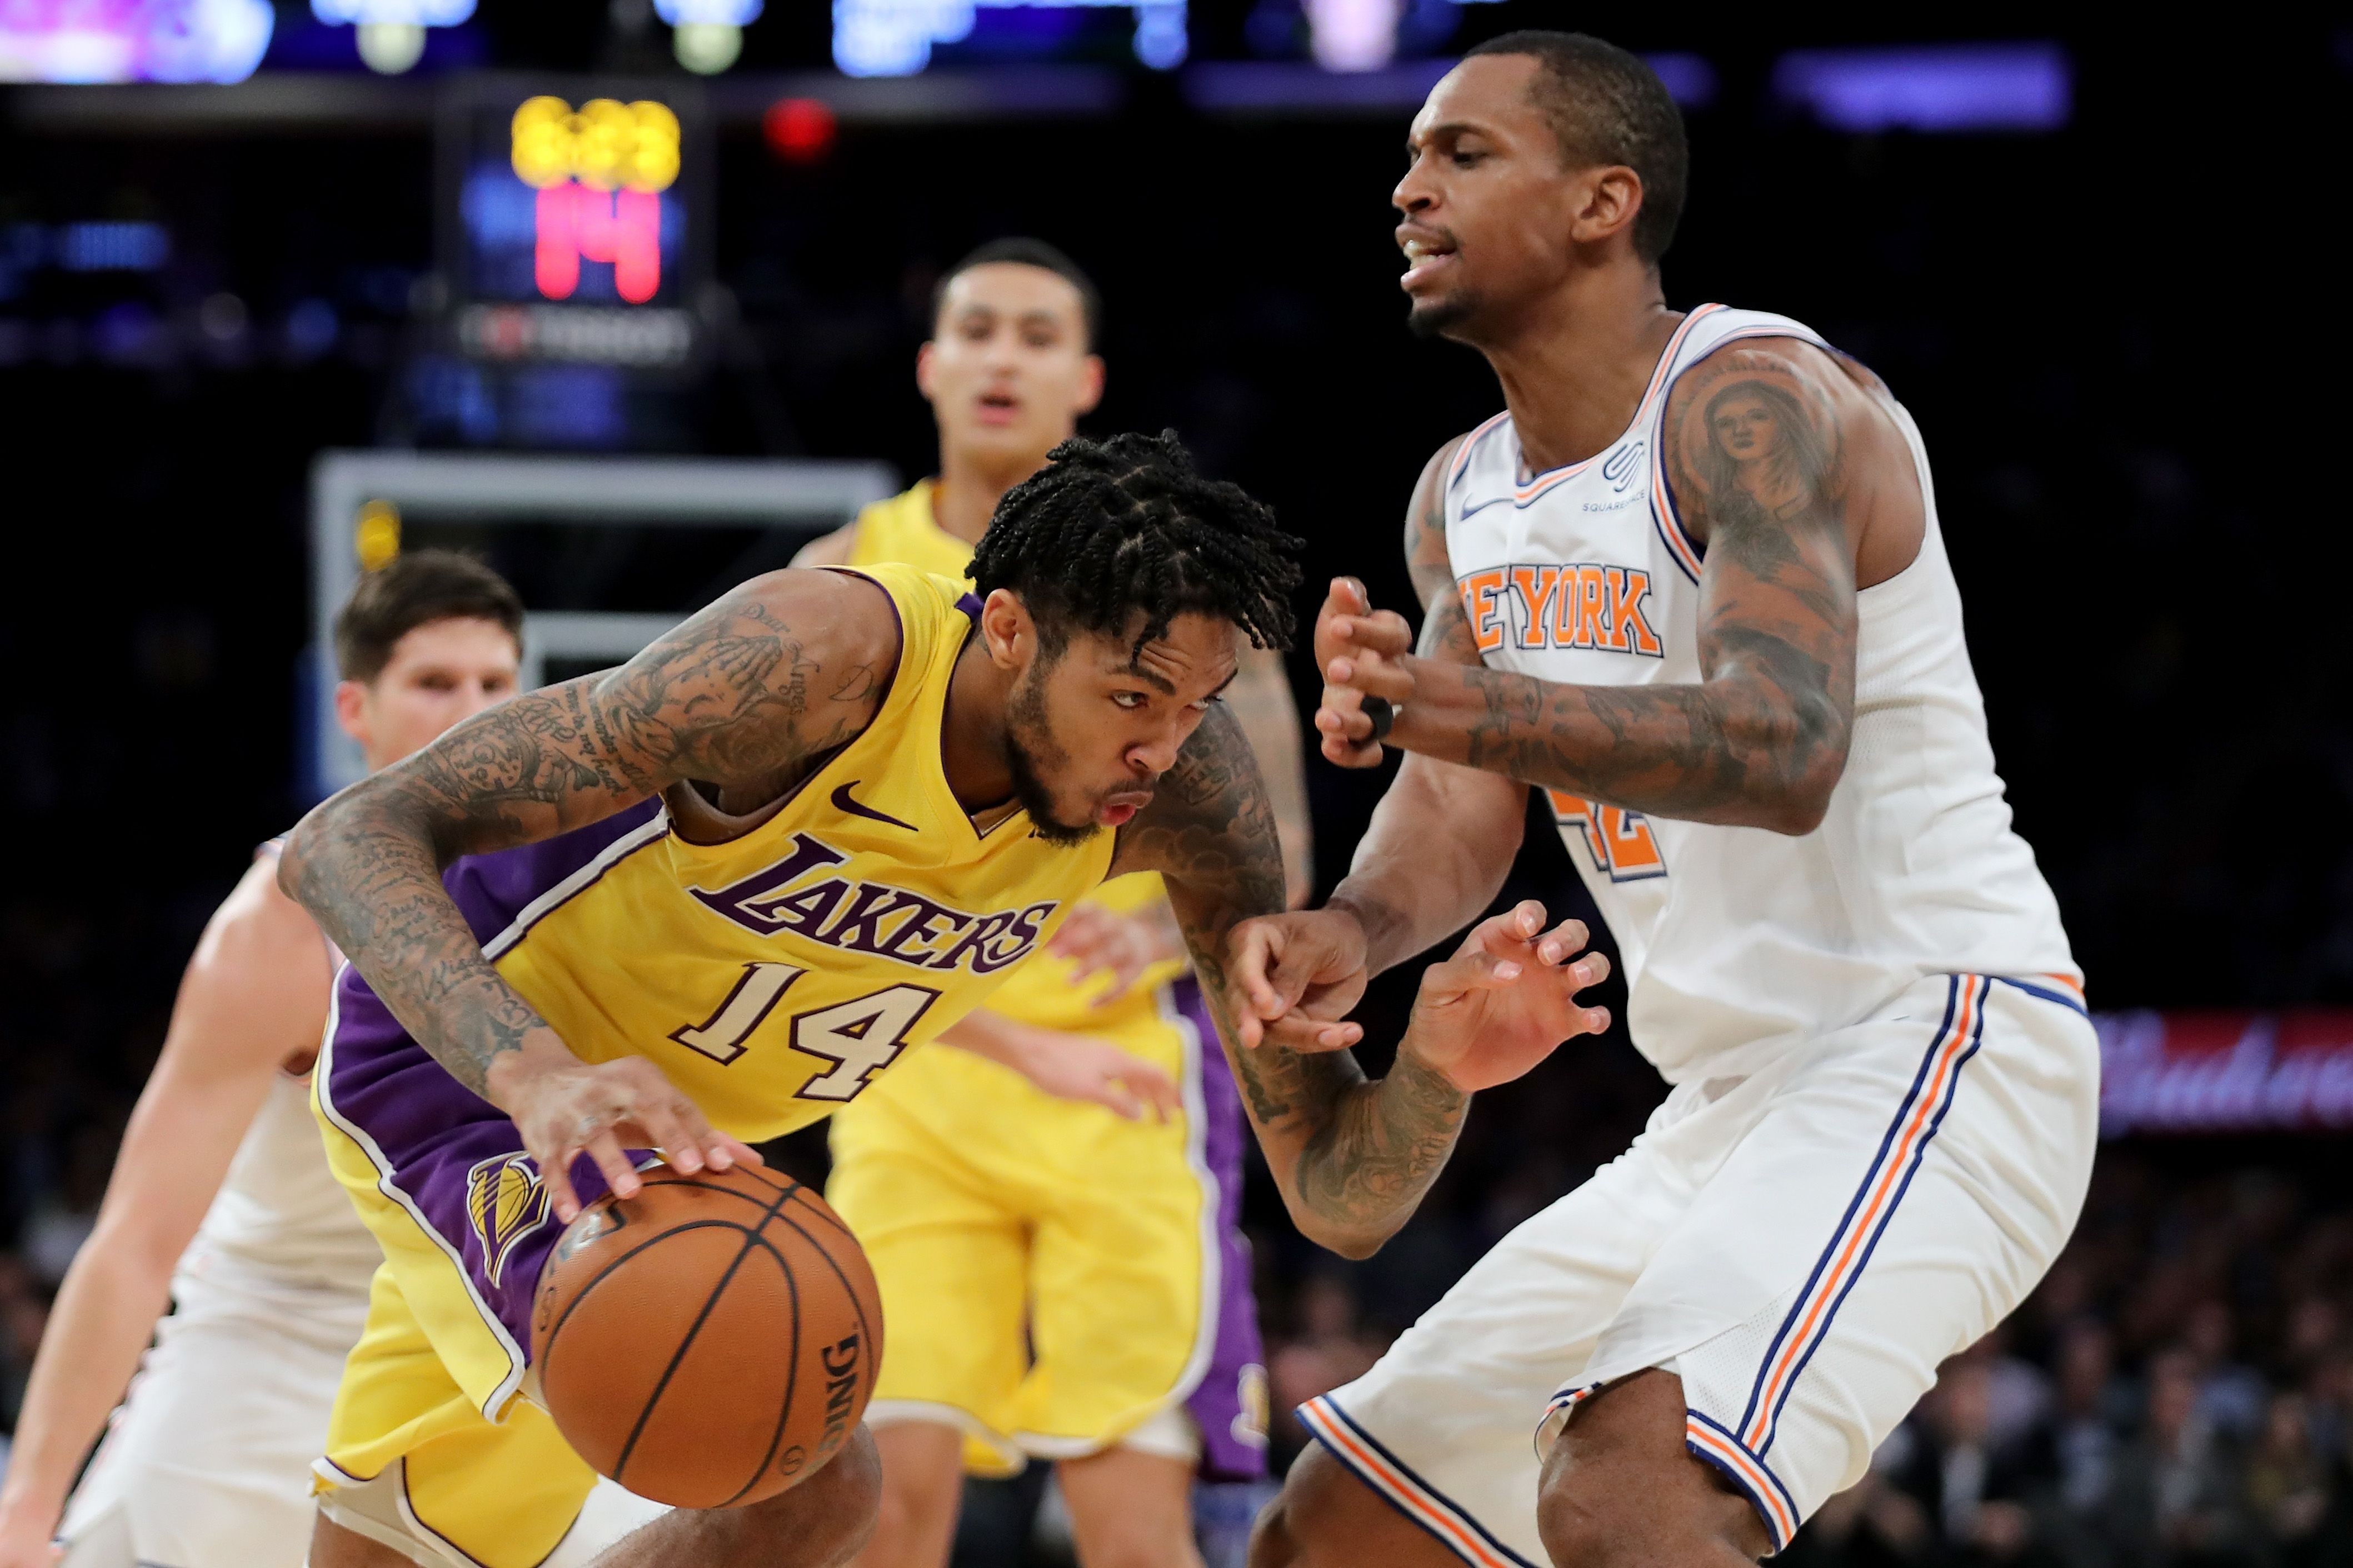 Los Angeles Lakers vs New York Knicks recap and highlights